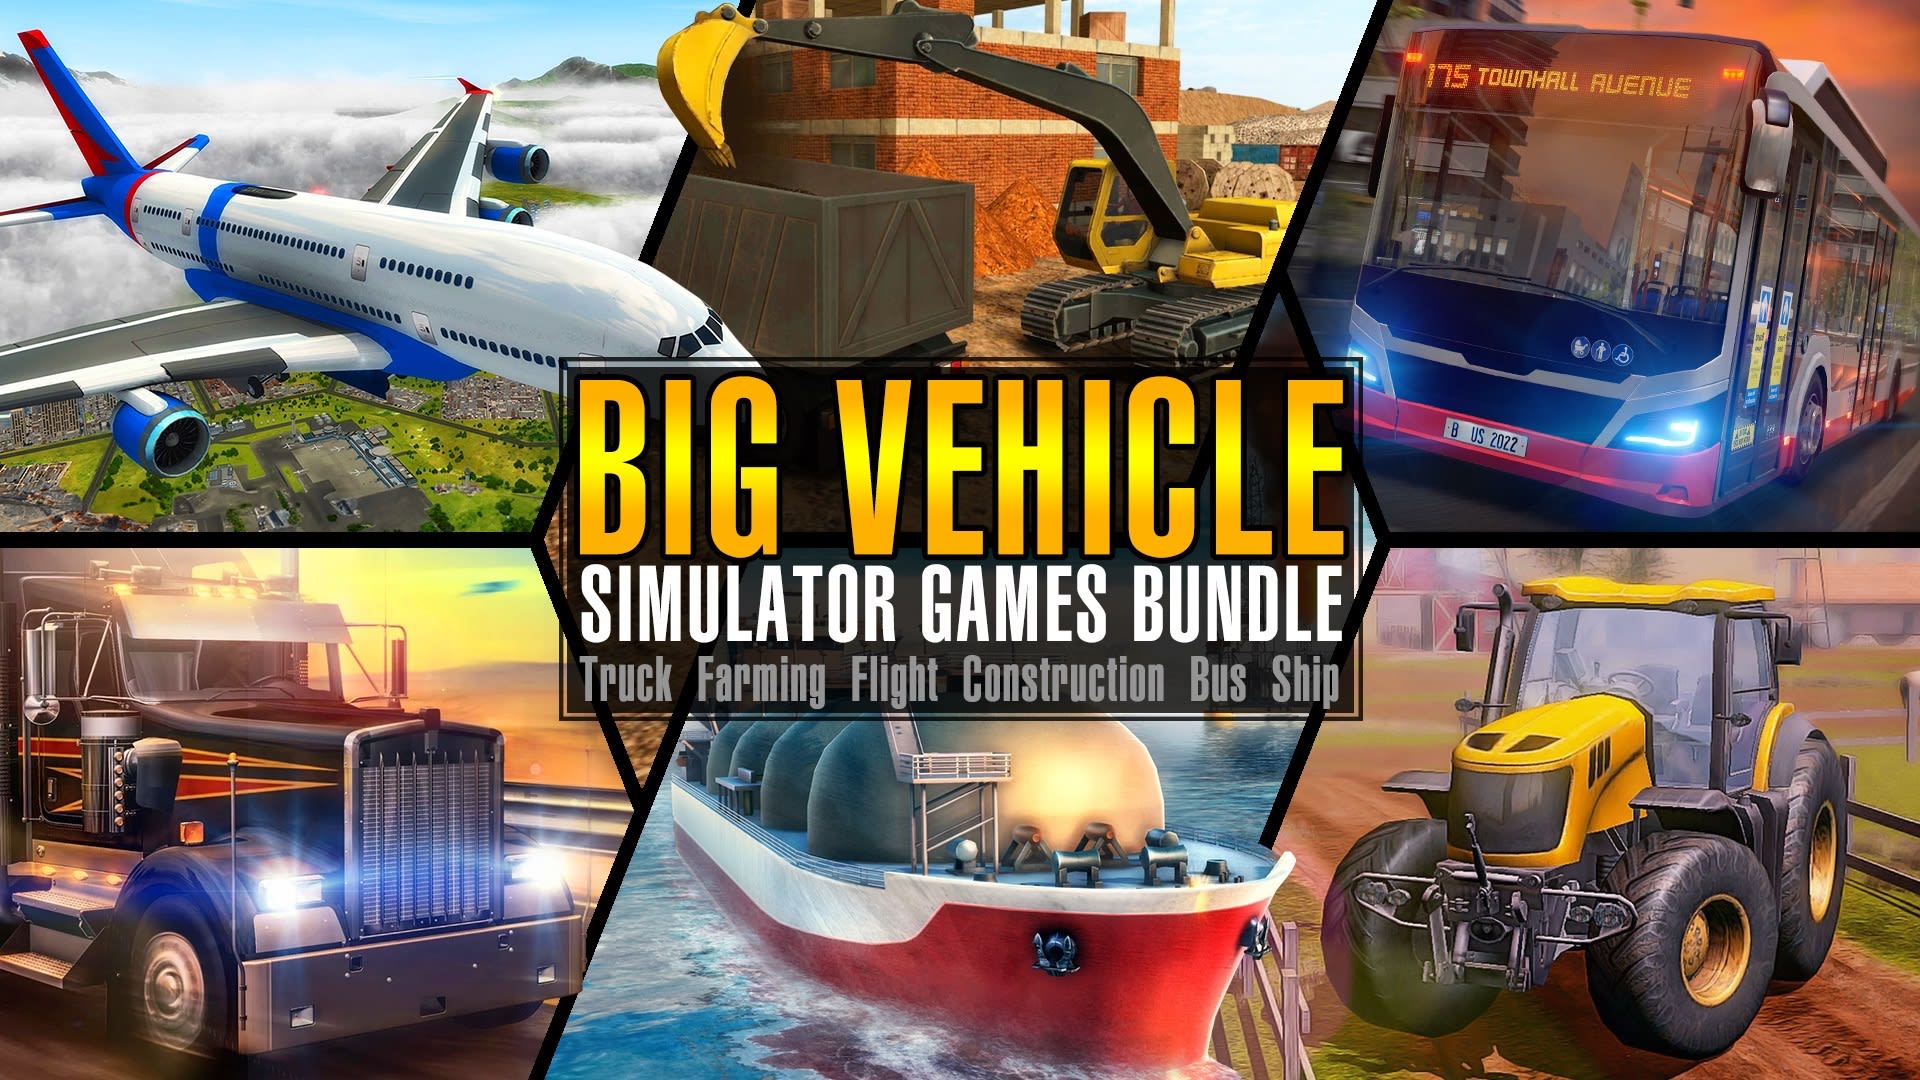 Big Vehicle Simulator Games Bundle - Truck Farming Flight Construction Bus Ship